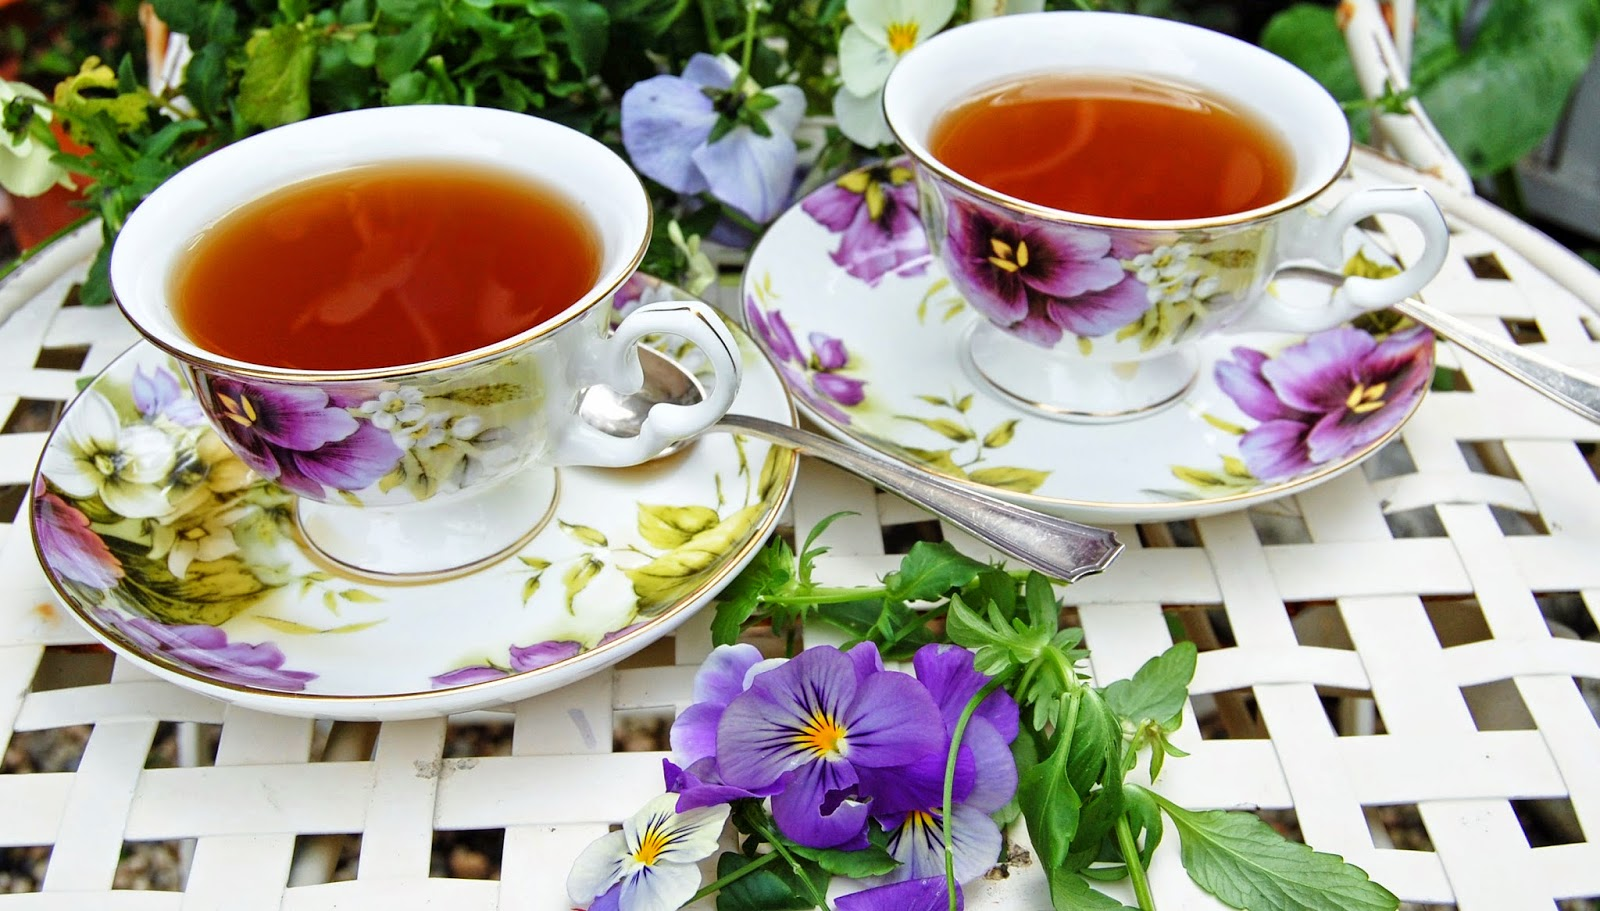 13 чашек чая. Чашка чая. Две чашки чая. Утро чай. Чай с цветами.